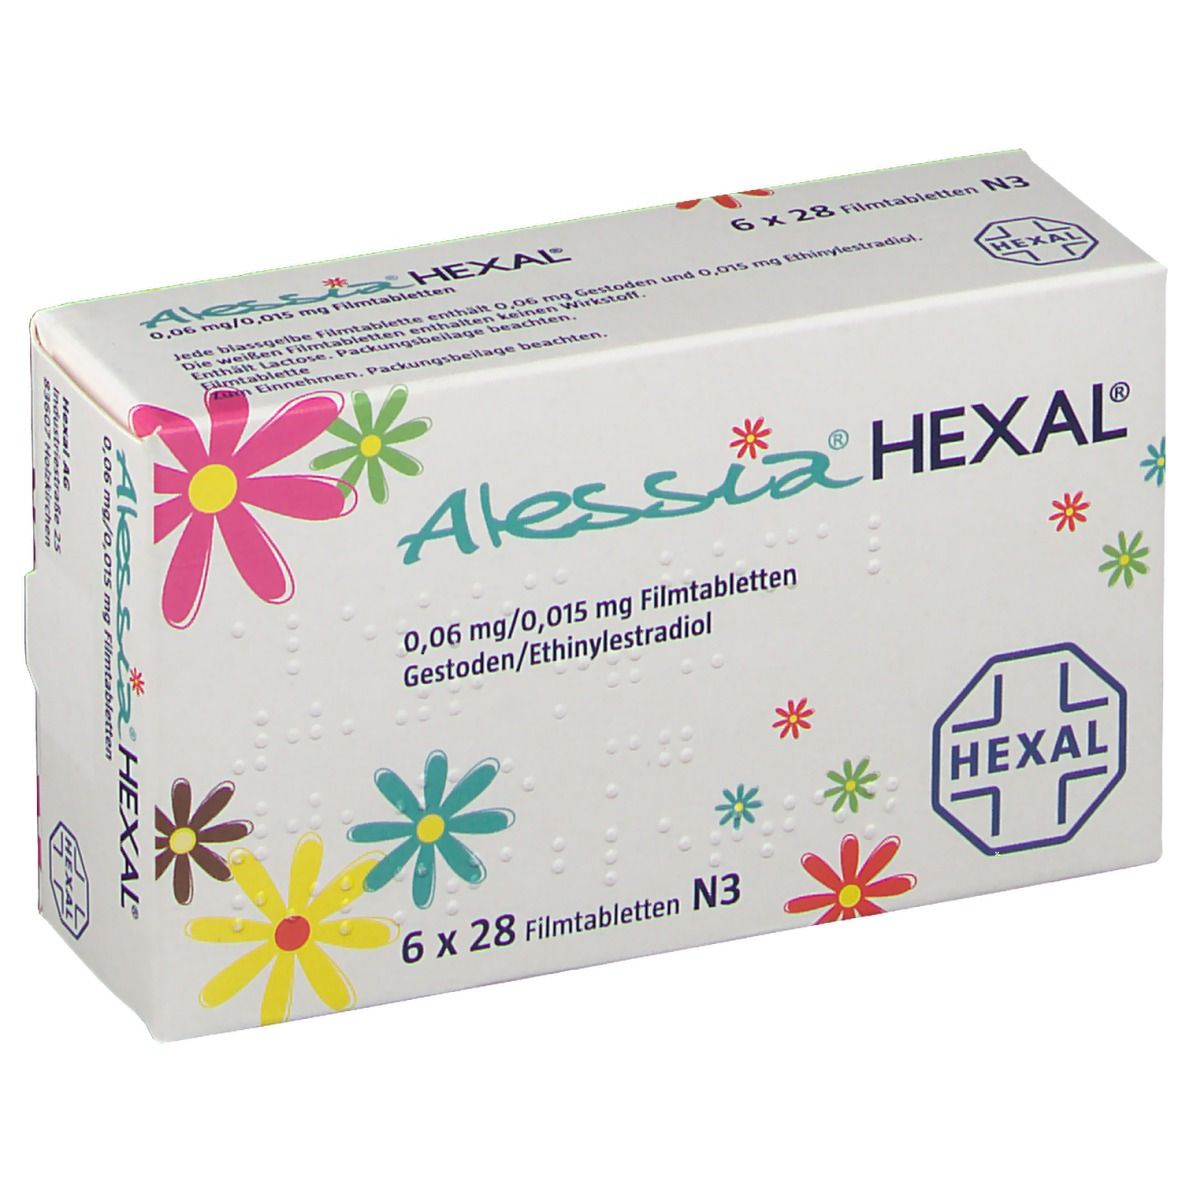 Alessia® HEXAL® 0,06 mg/0,015 mg